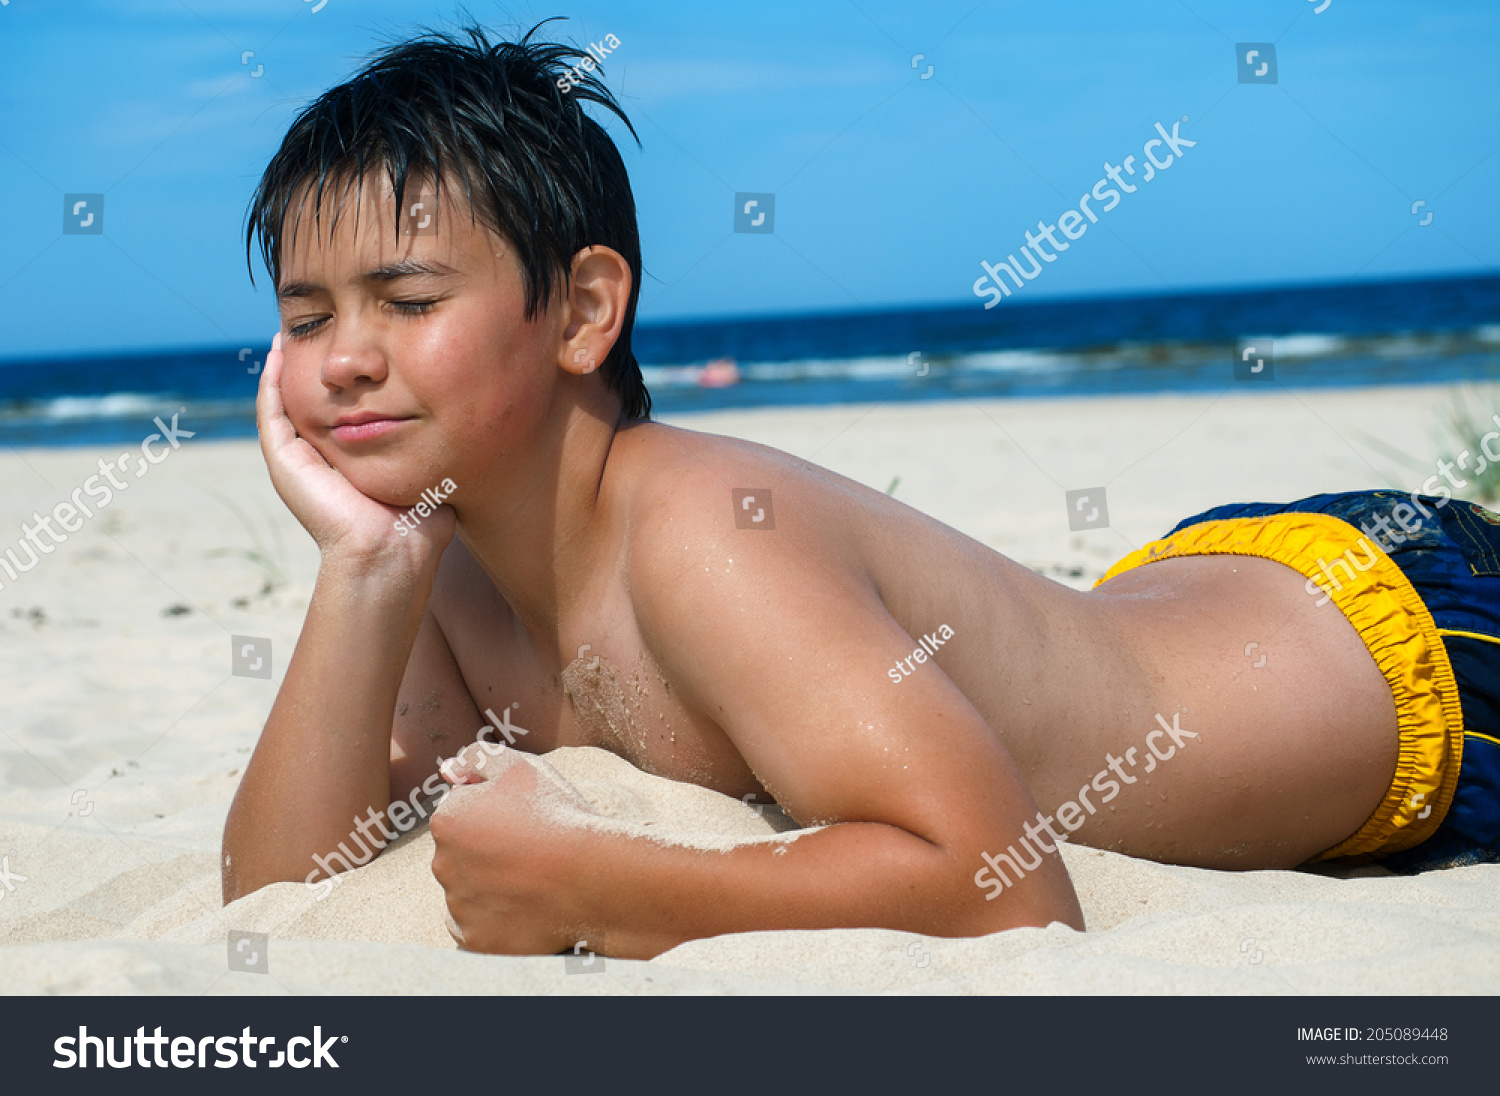 Boy Lying On Beach Stock Photo 205089448 Shutterstock.